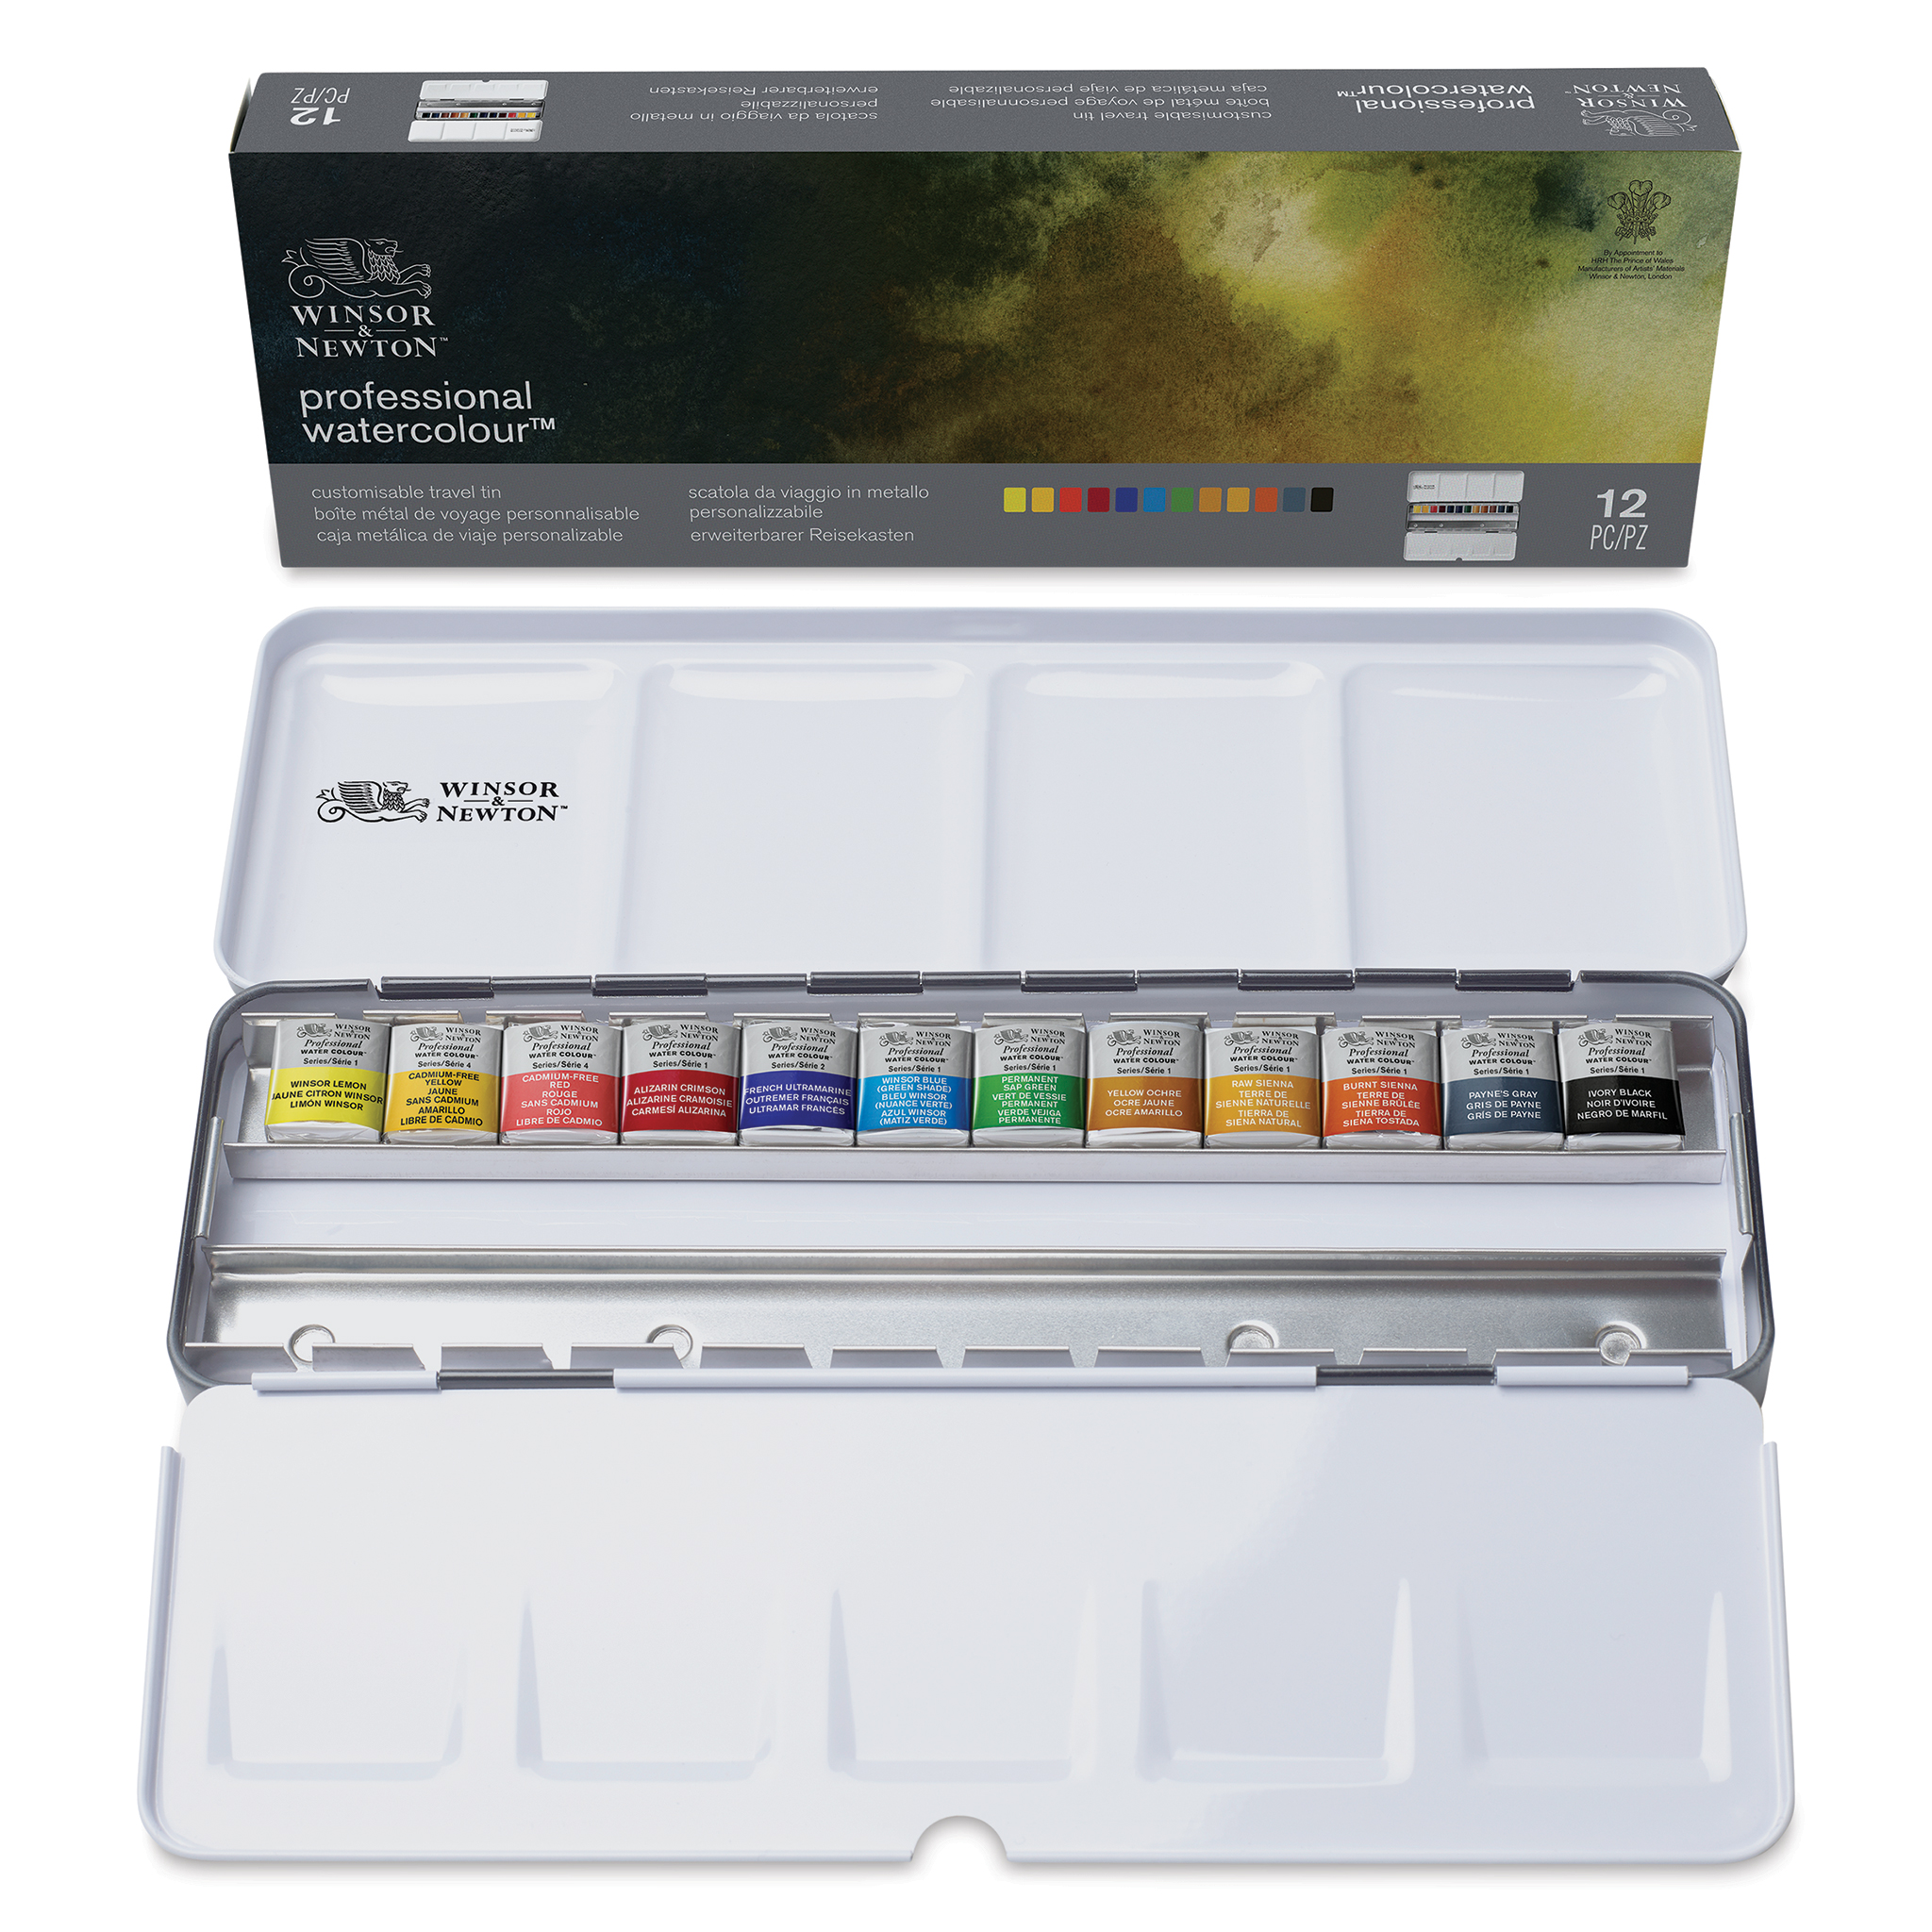 Winsor & Newton Professional Watercolor Field Box Set 12 Half Pans